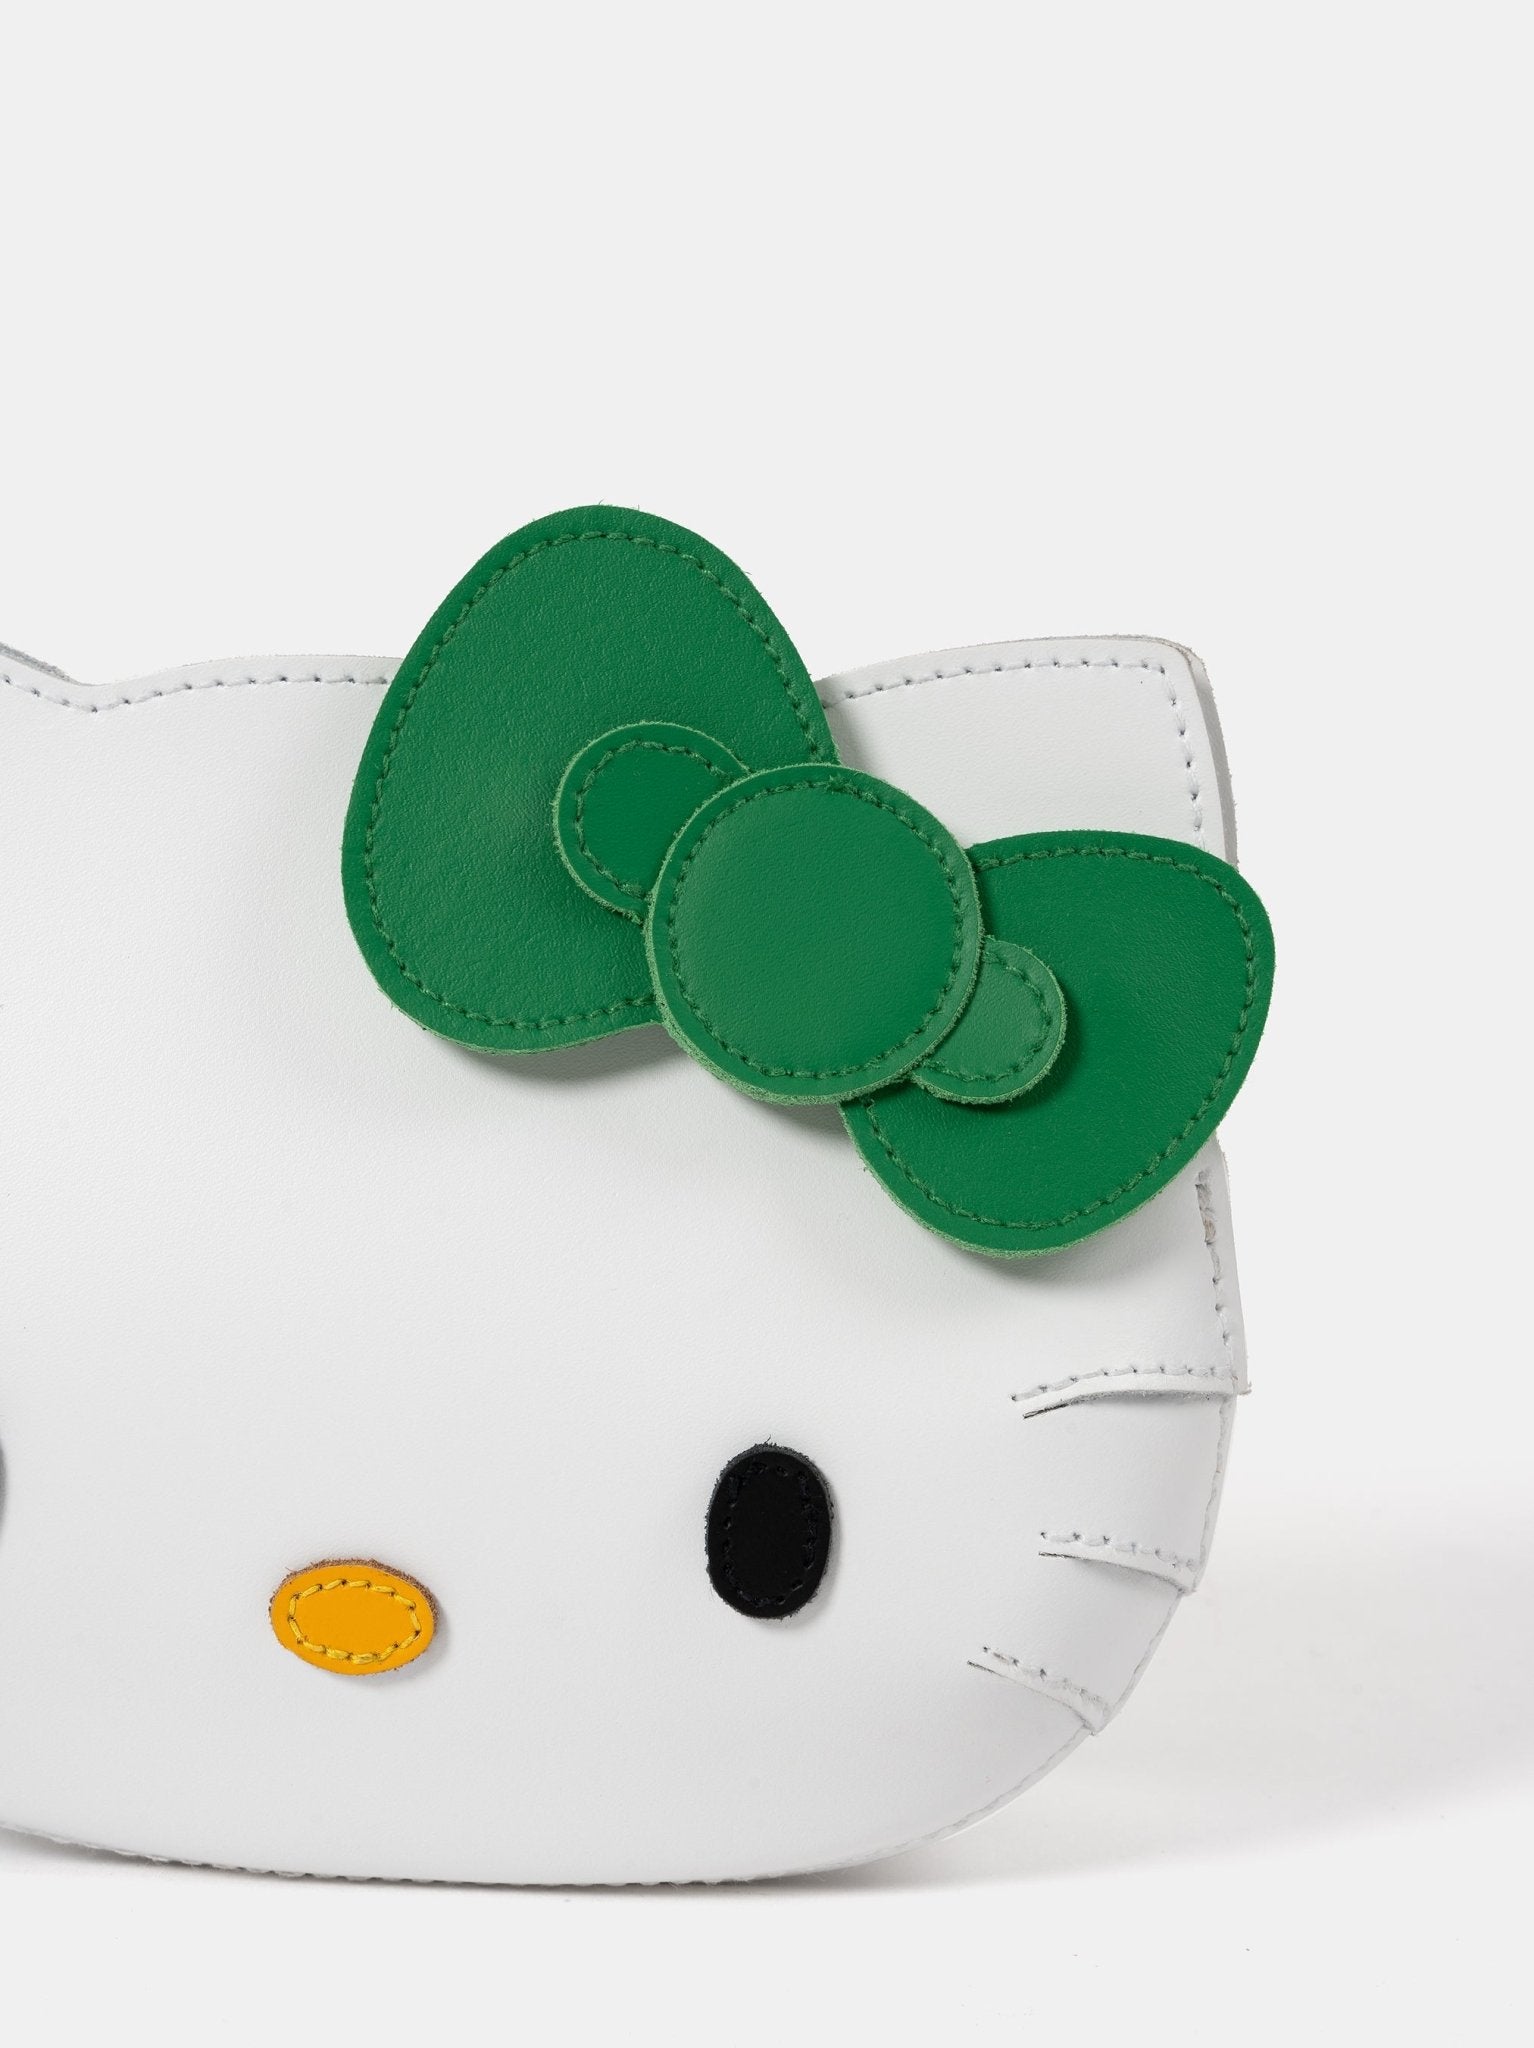 The Mini Hello Kitty Detachable Bow - Apple Green - The Cambridge Satchel Company EU Store